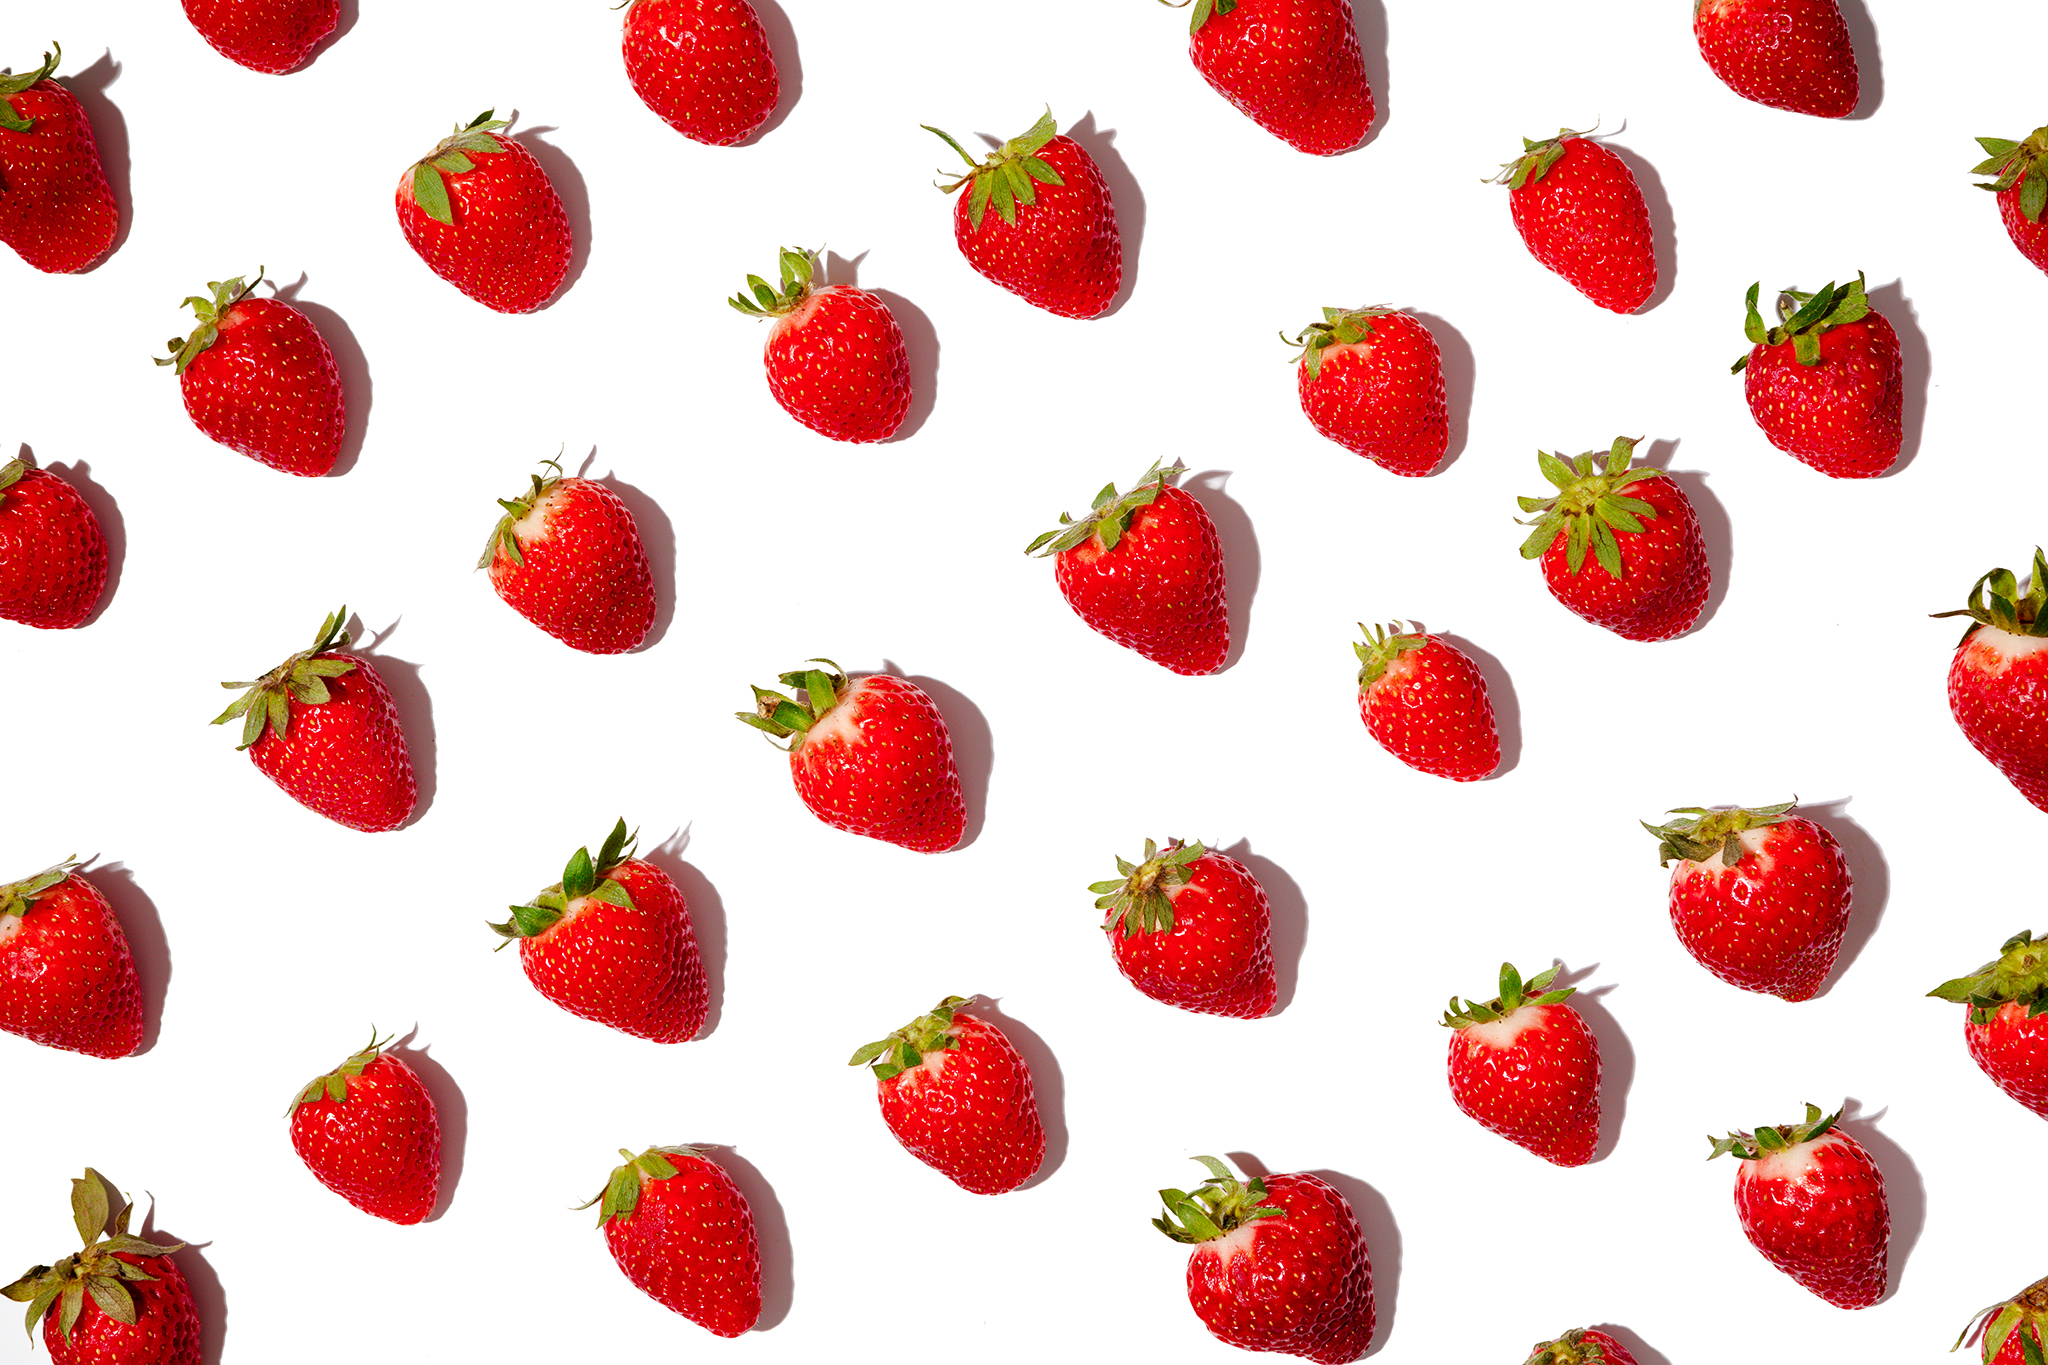 strawberries-pop-art-graphic-food-jon-kempner-photography